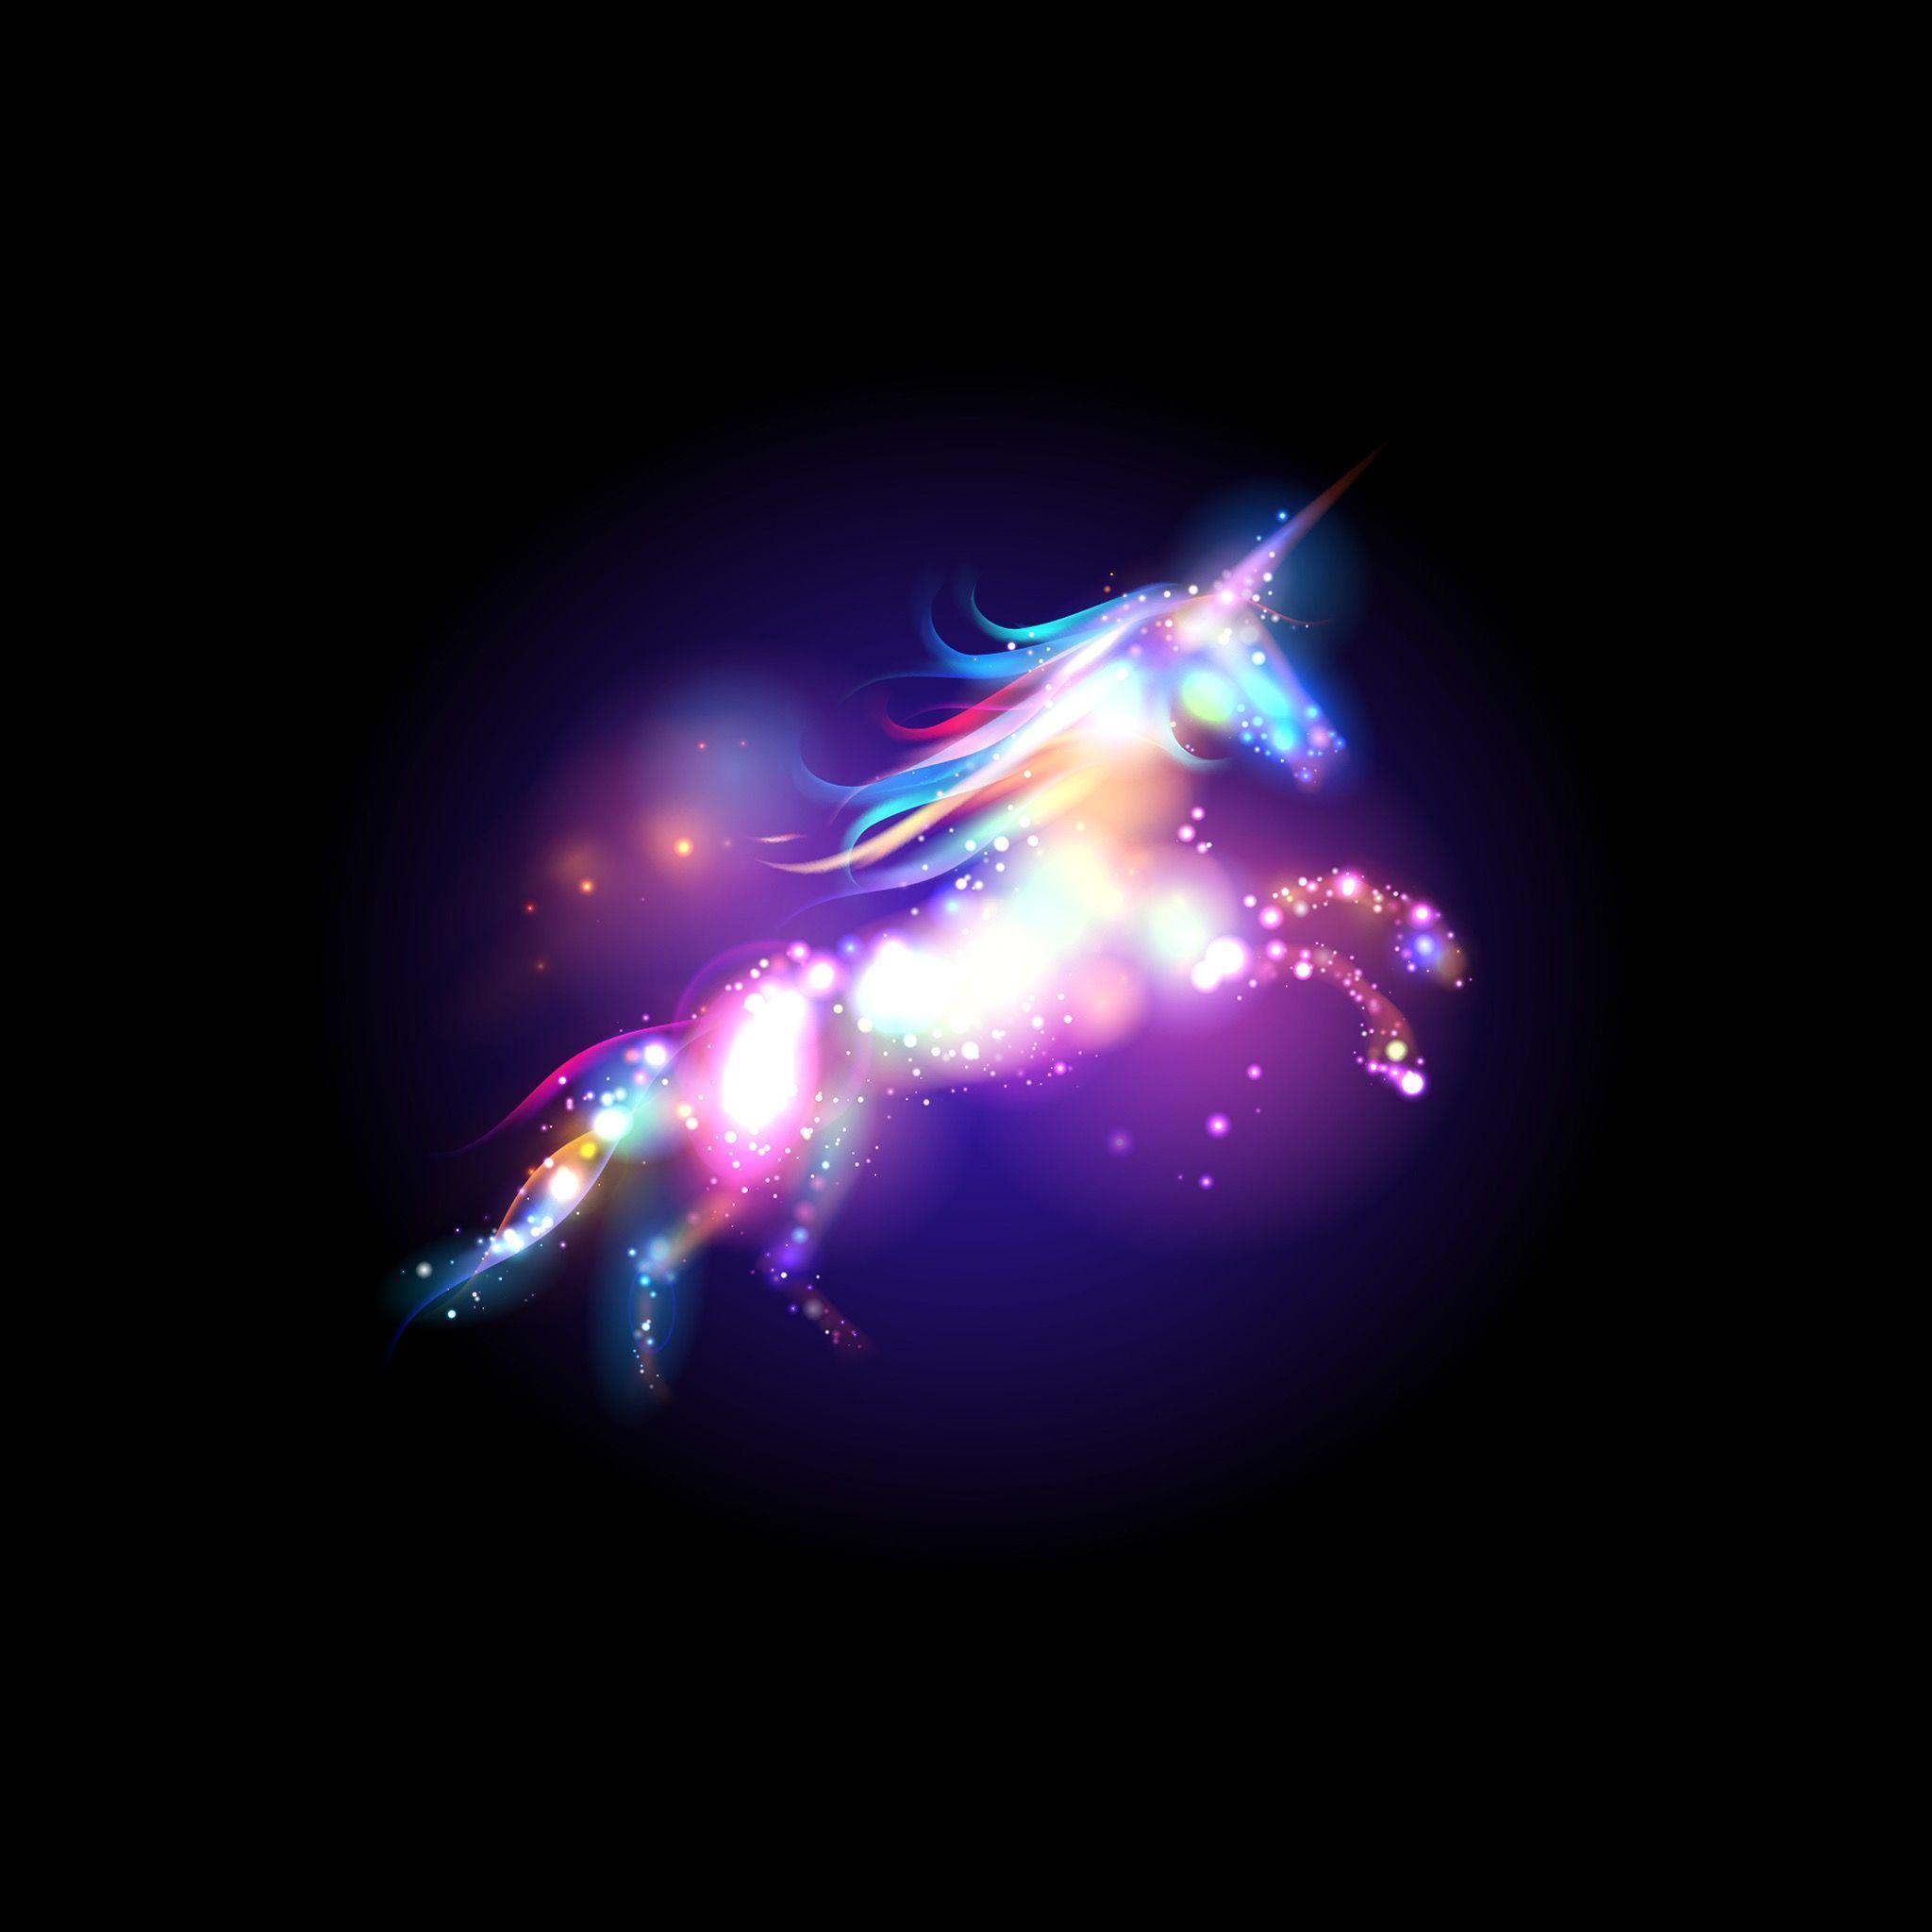 Galaxy Unicorn Wallpapers - Top Free Galaxy Unicorn ...